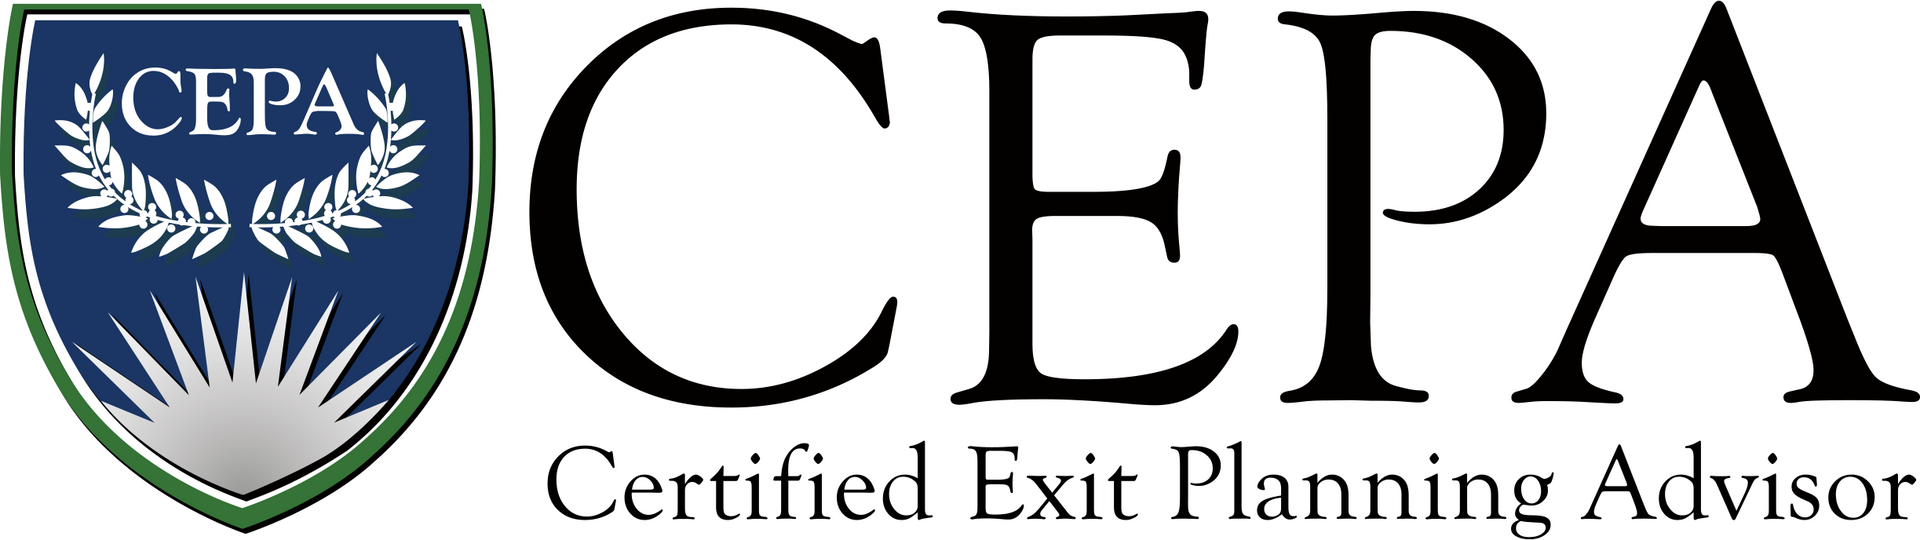 CEPA Certified Exit Planning Advisor